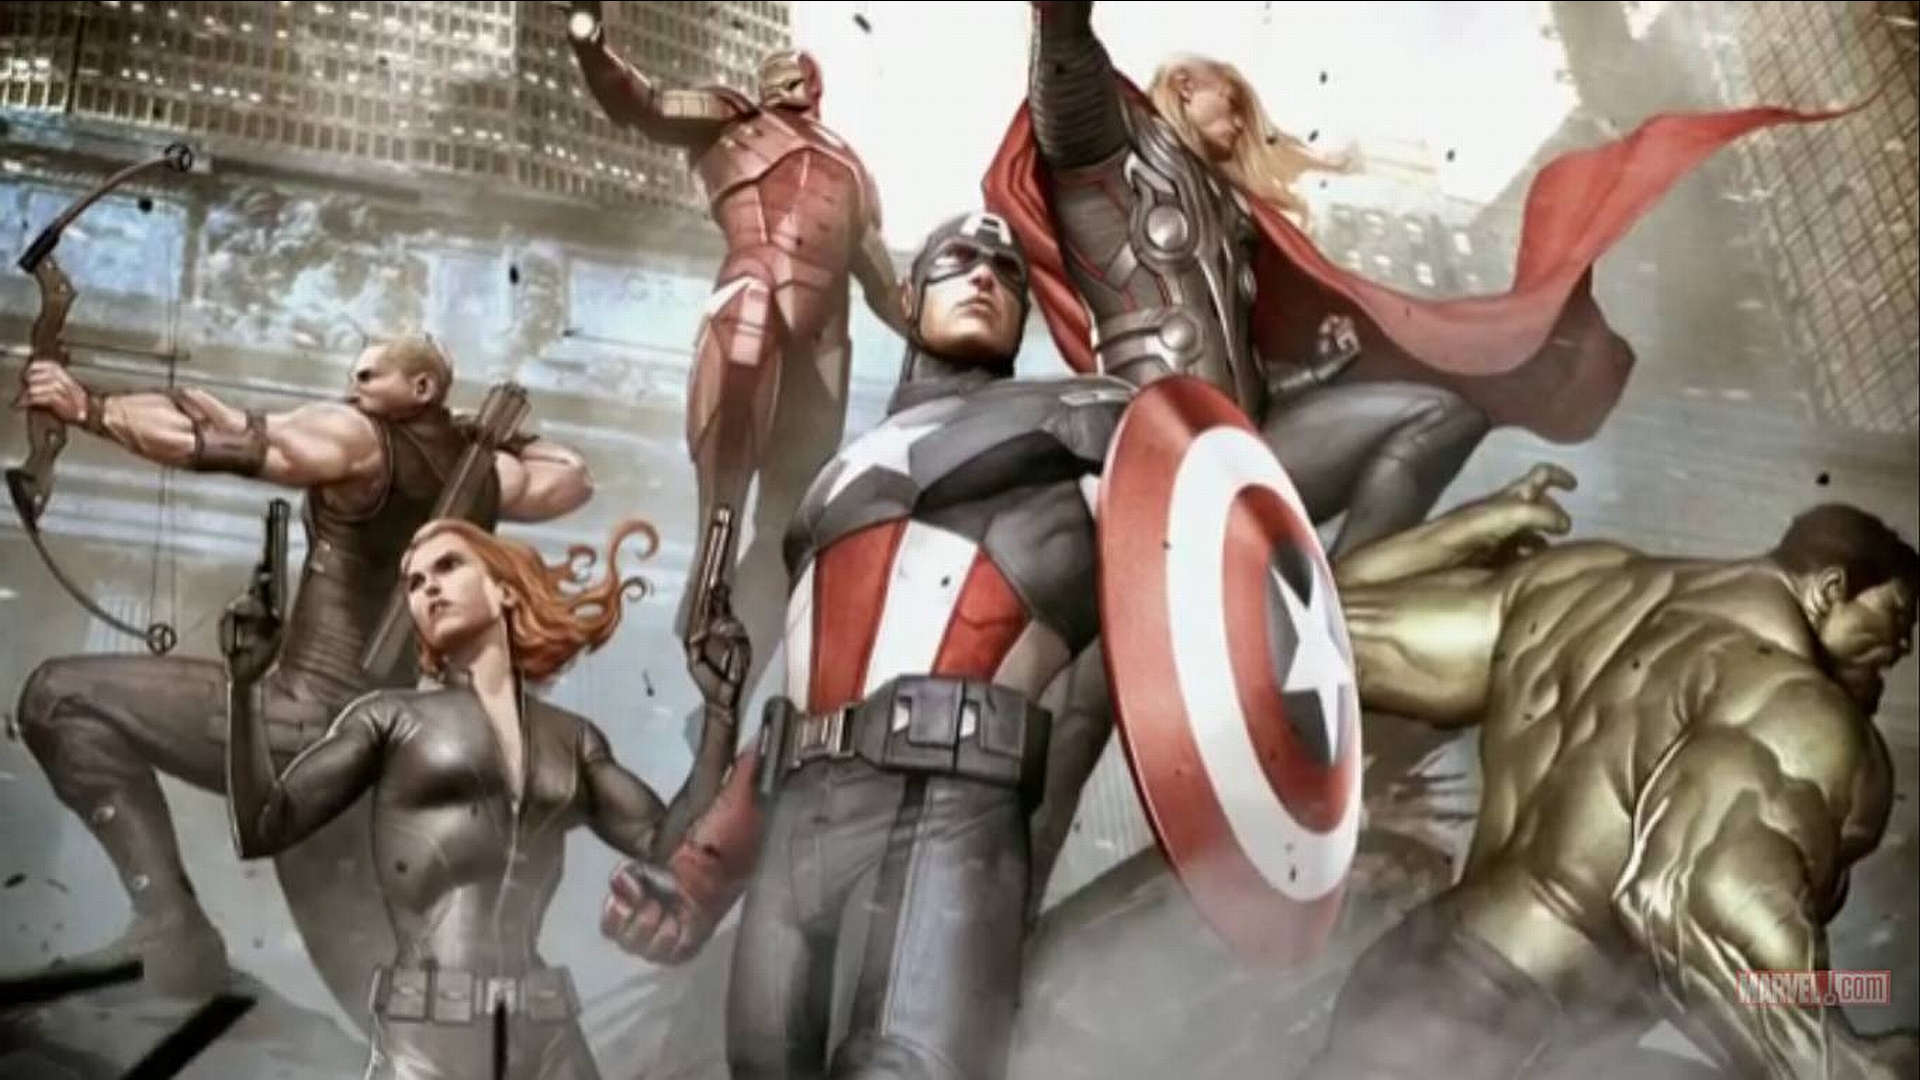 Avengers superheroes in action: Hawkeye, Black Widow, Iron Man, Captain America, Thor, and Hulk.